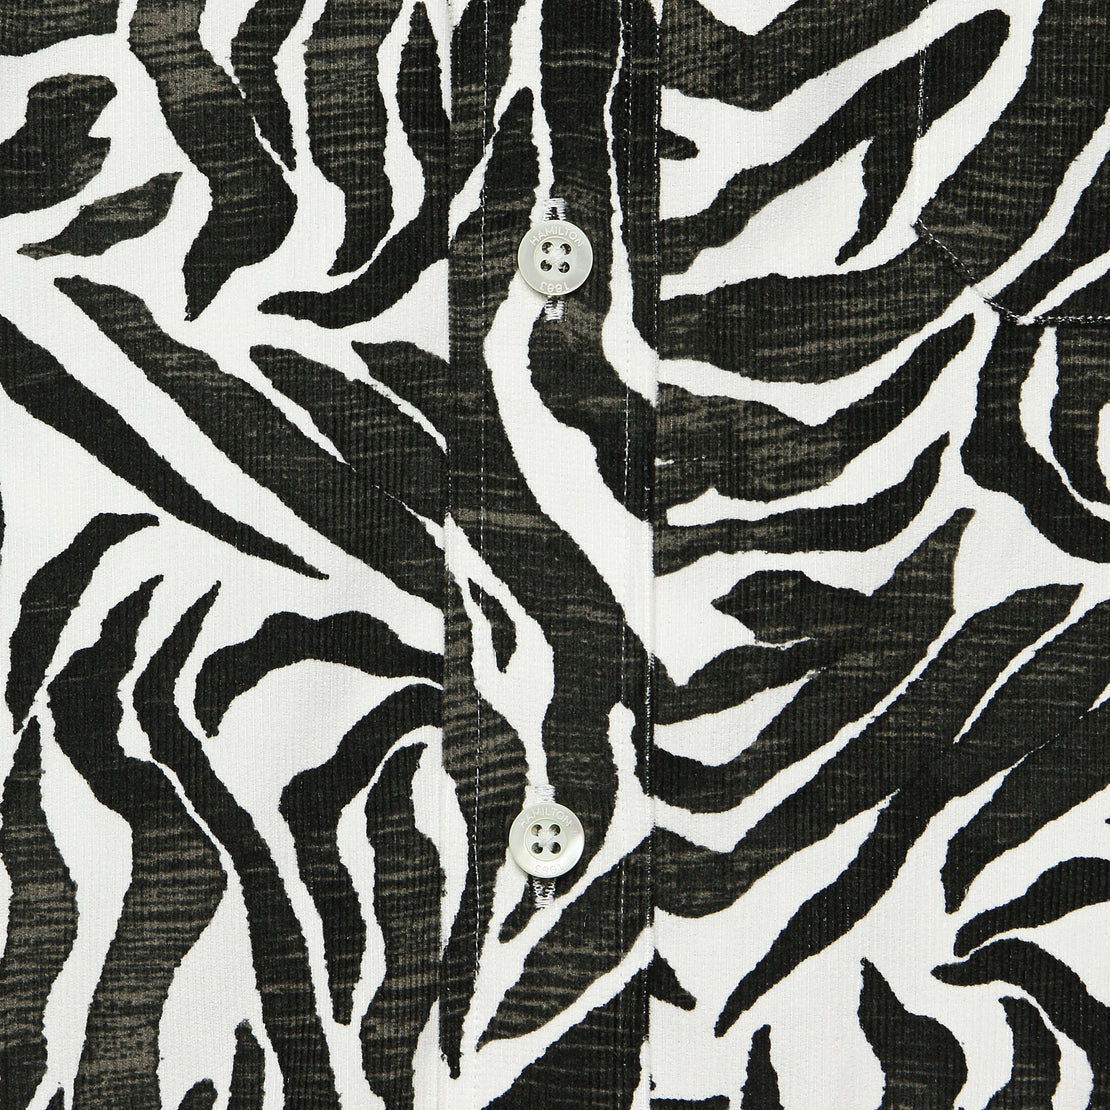 Zebra Corduroy Shirt - Black/White - Hamilton Shirt Co. - STAG Provisions - Tops - L/S Woven - Other Pattern